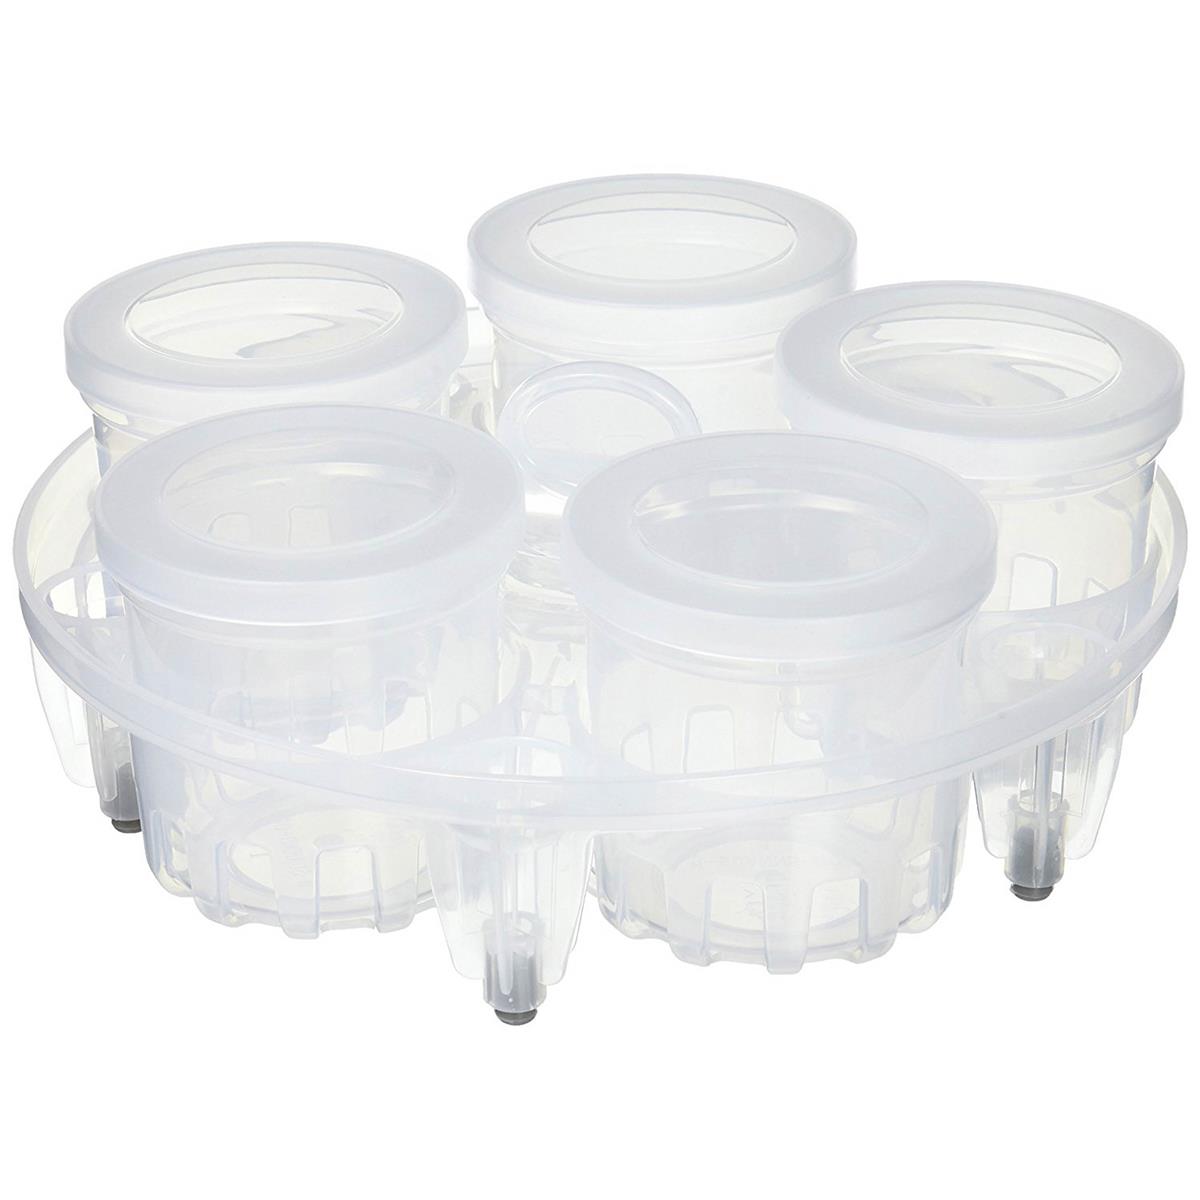 Instant Pot® - Set de Yogurt/Esterilizador para modelos de 5,7 y 8 Litros